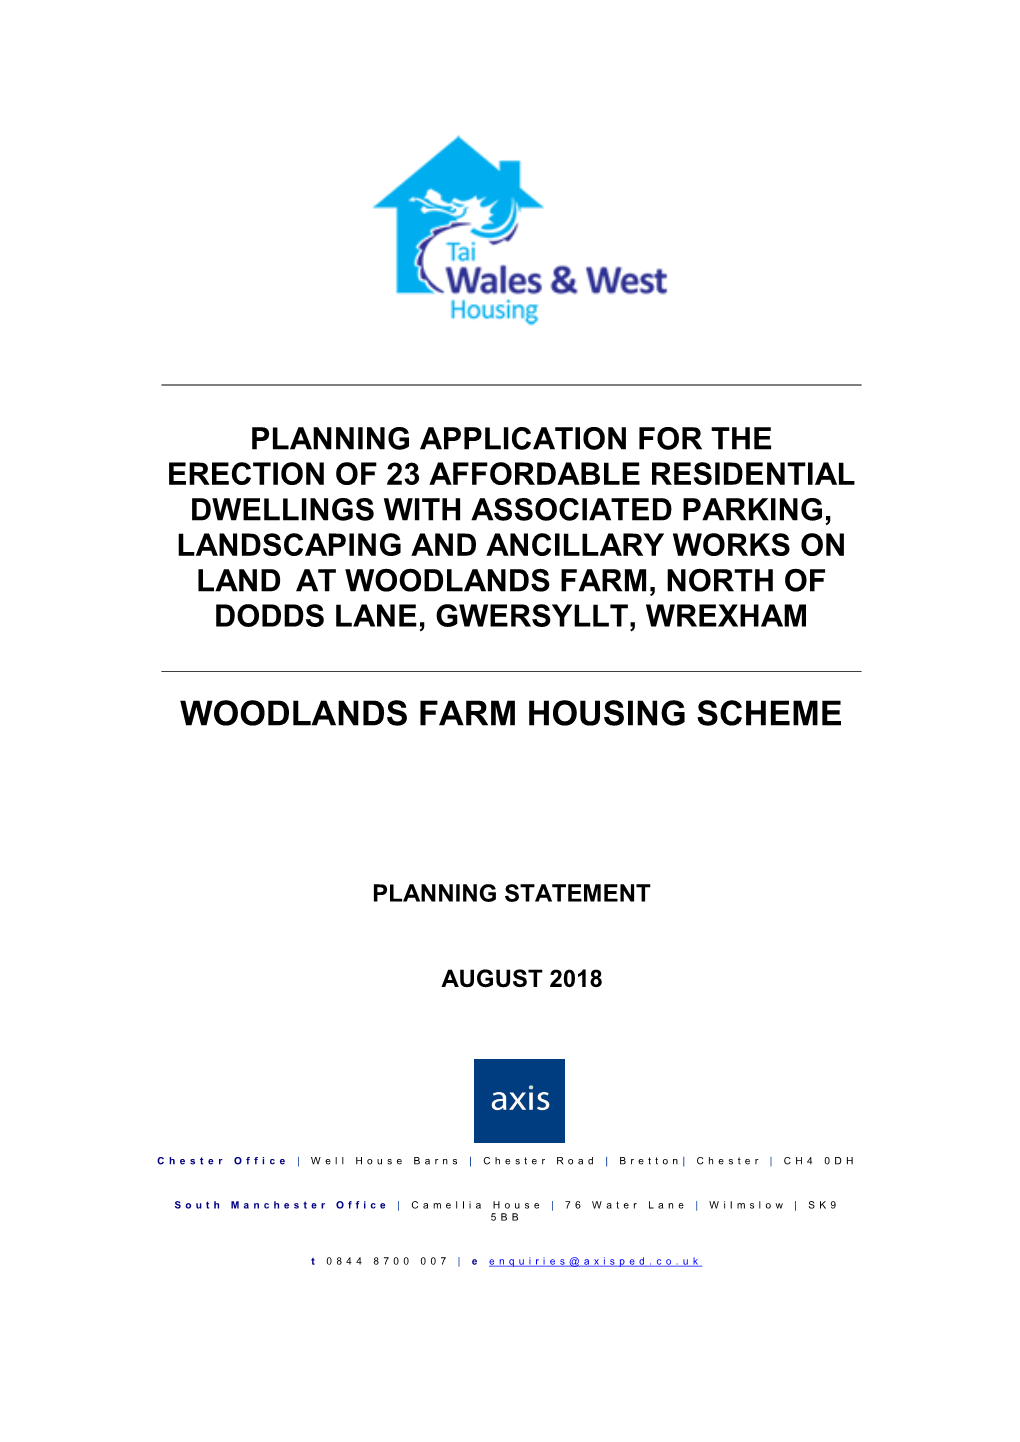 Woodlands Farm Housing Scheme